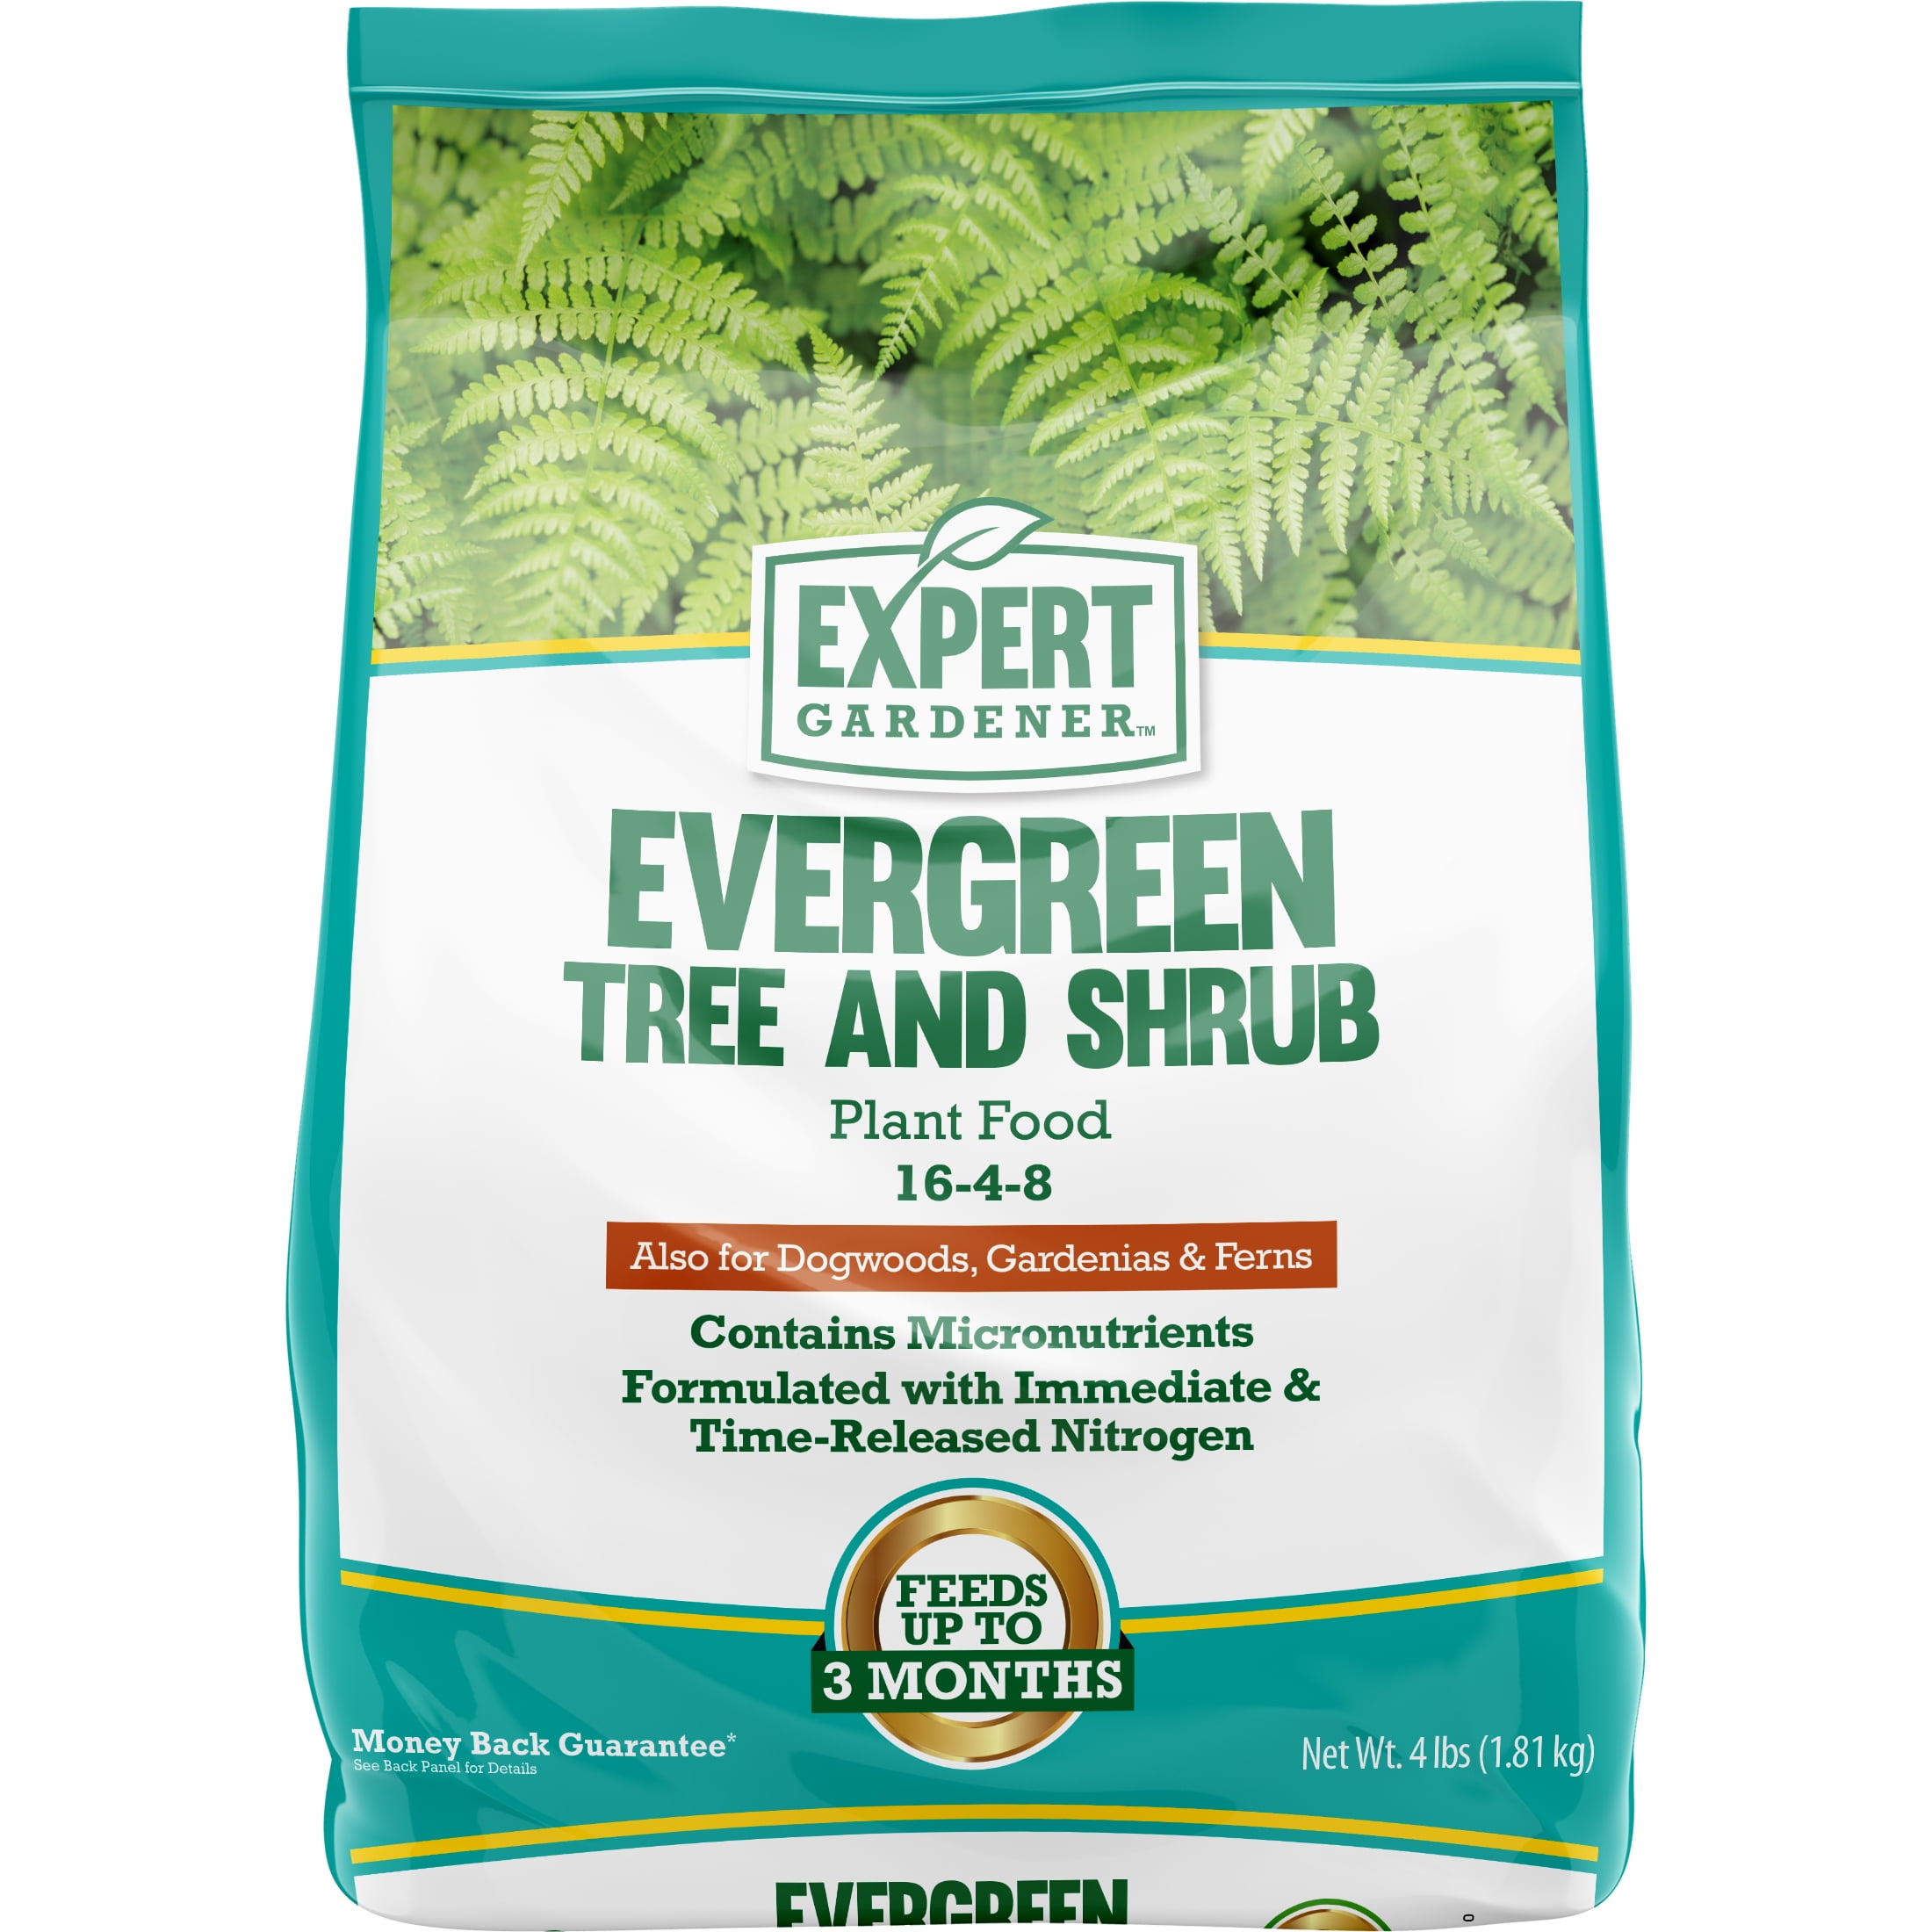 Expert Gardener Evergreen Tree and Shrub Plant Food, 16-4-8 Fertilizer, 4 lb.